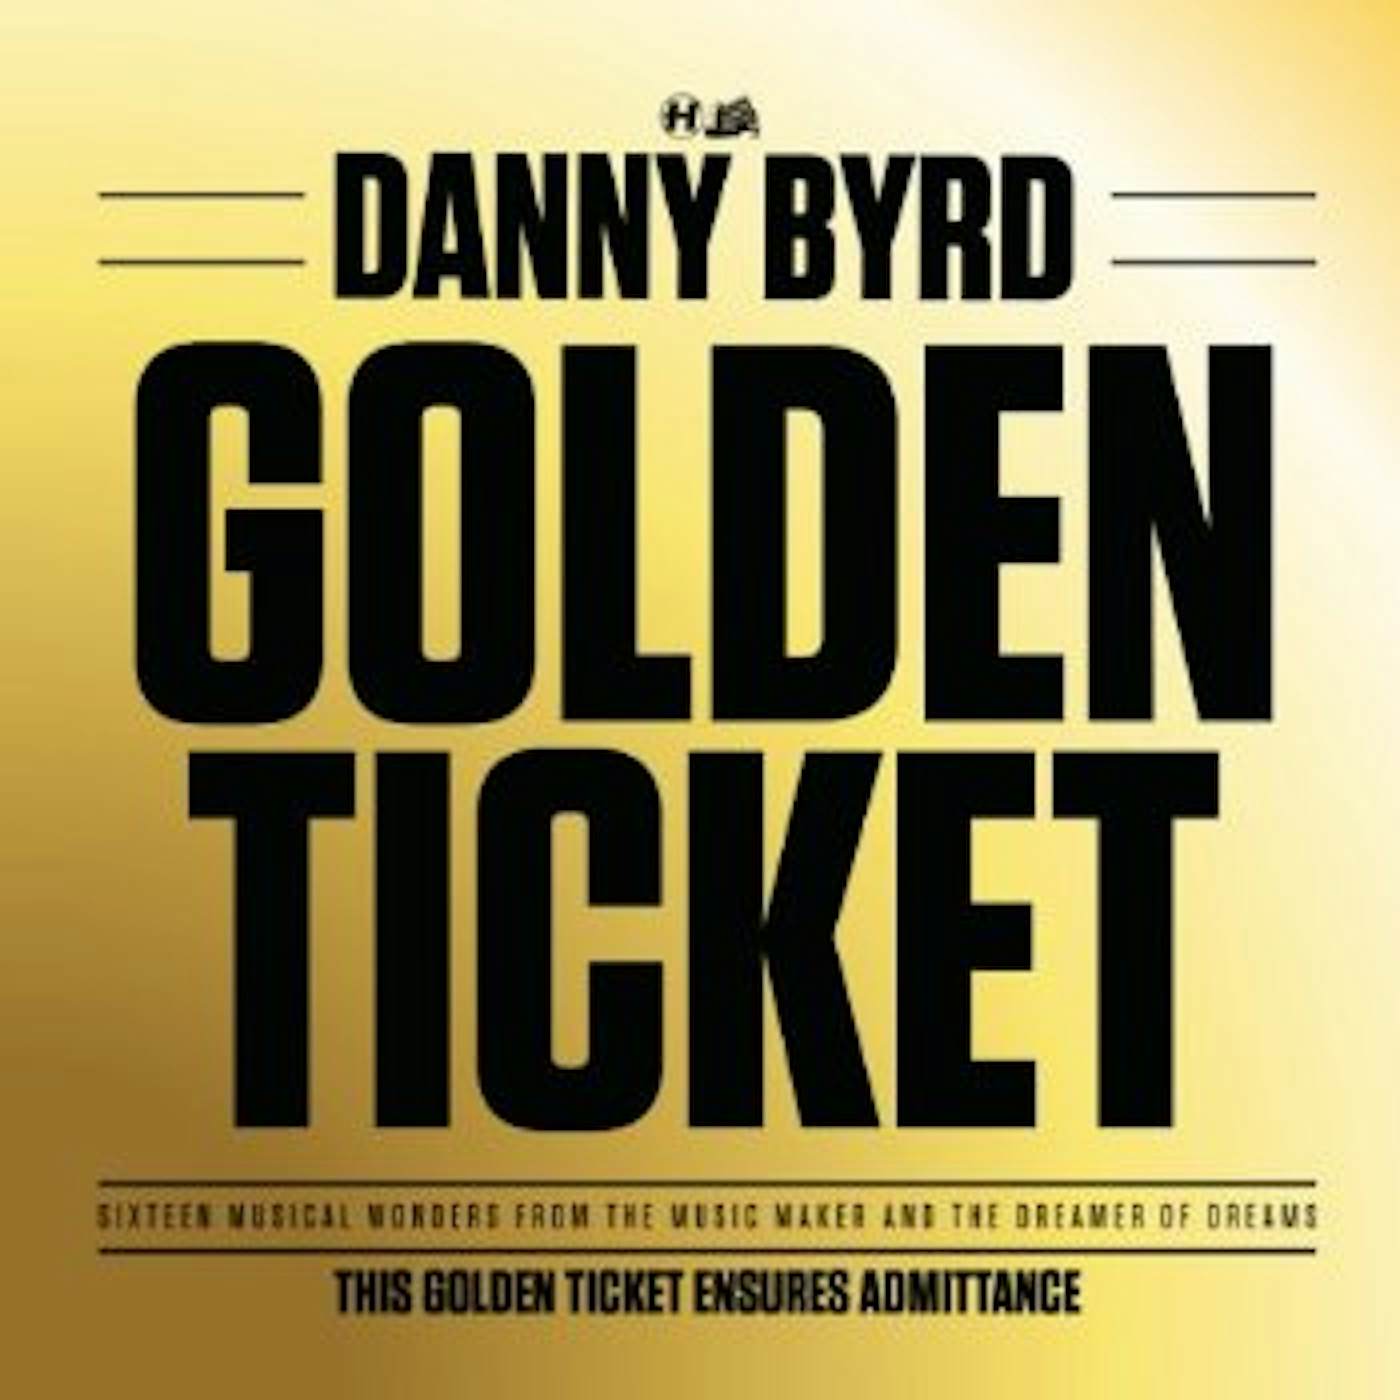 Danny Byrd GOLDEN TICKET CD